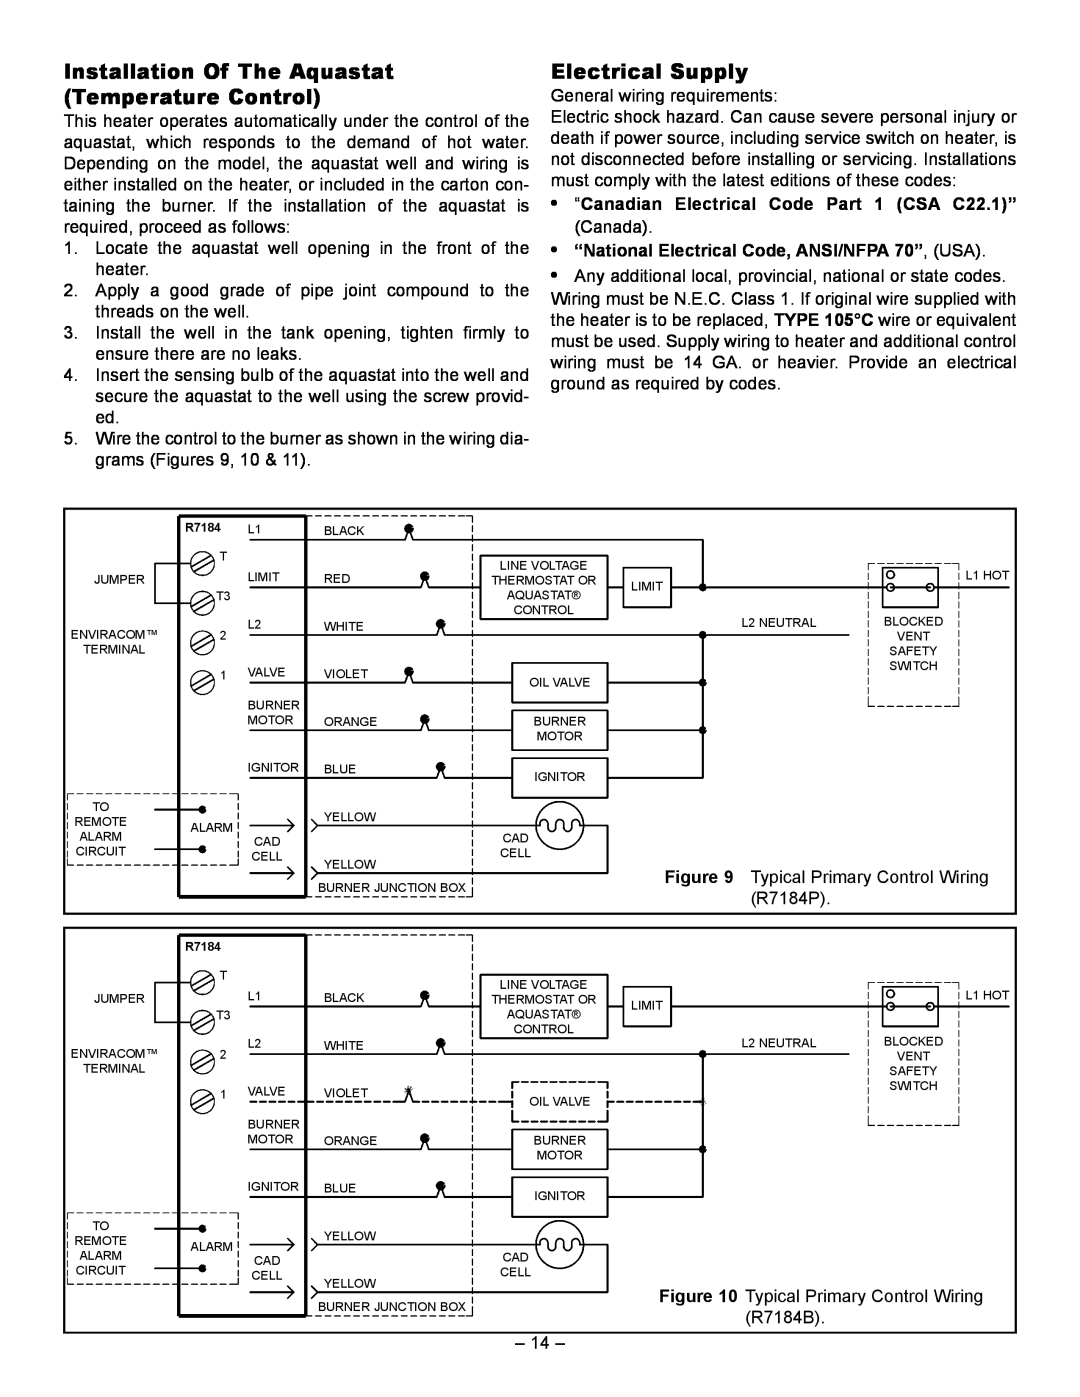 GSW JWF507, JWF657 manual Installation Of The Aquastat Temperature Control, Electrical Supply 